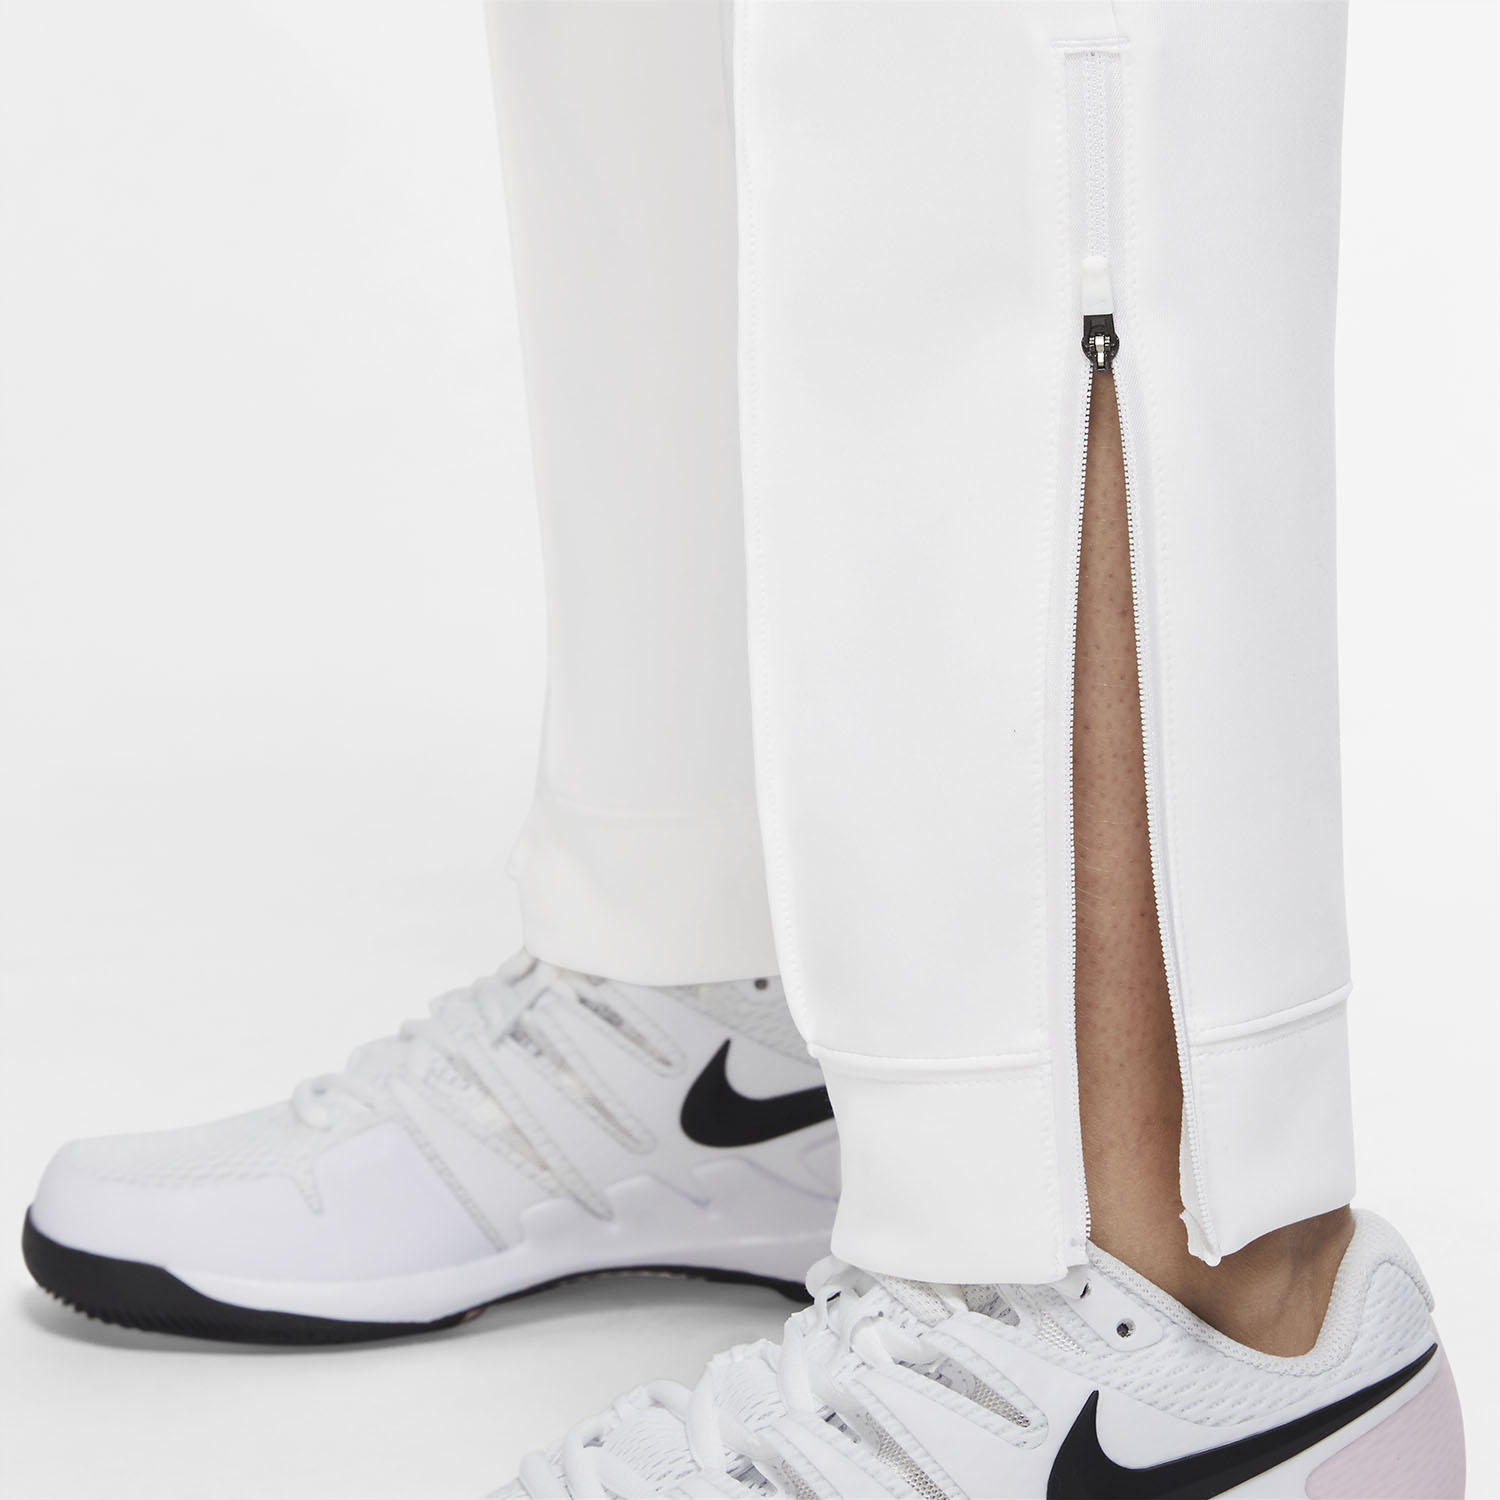 Nike Heritage Knit Pants - White